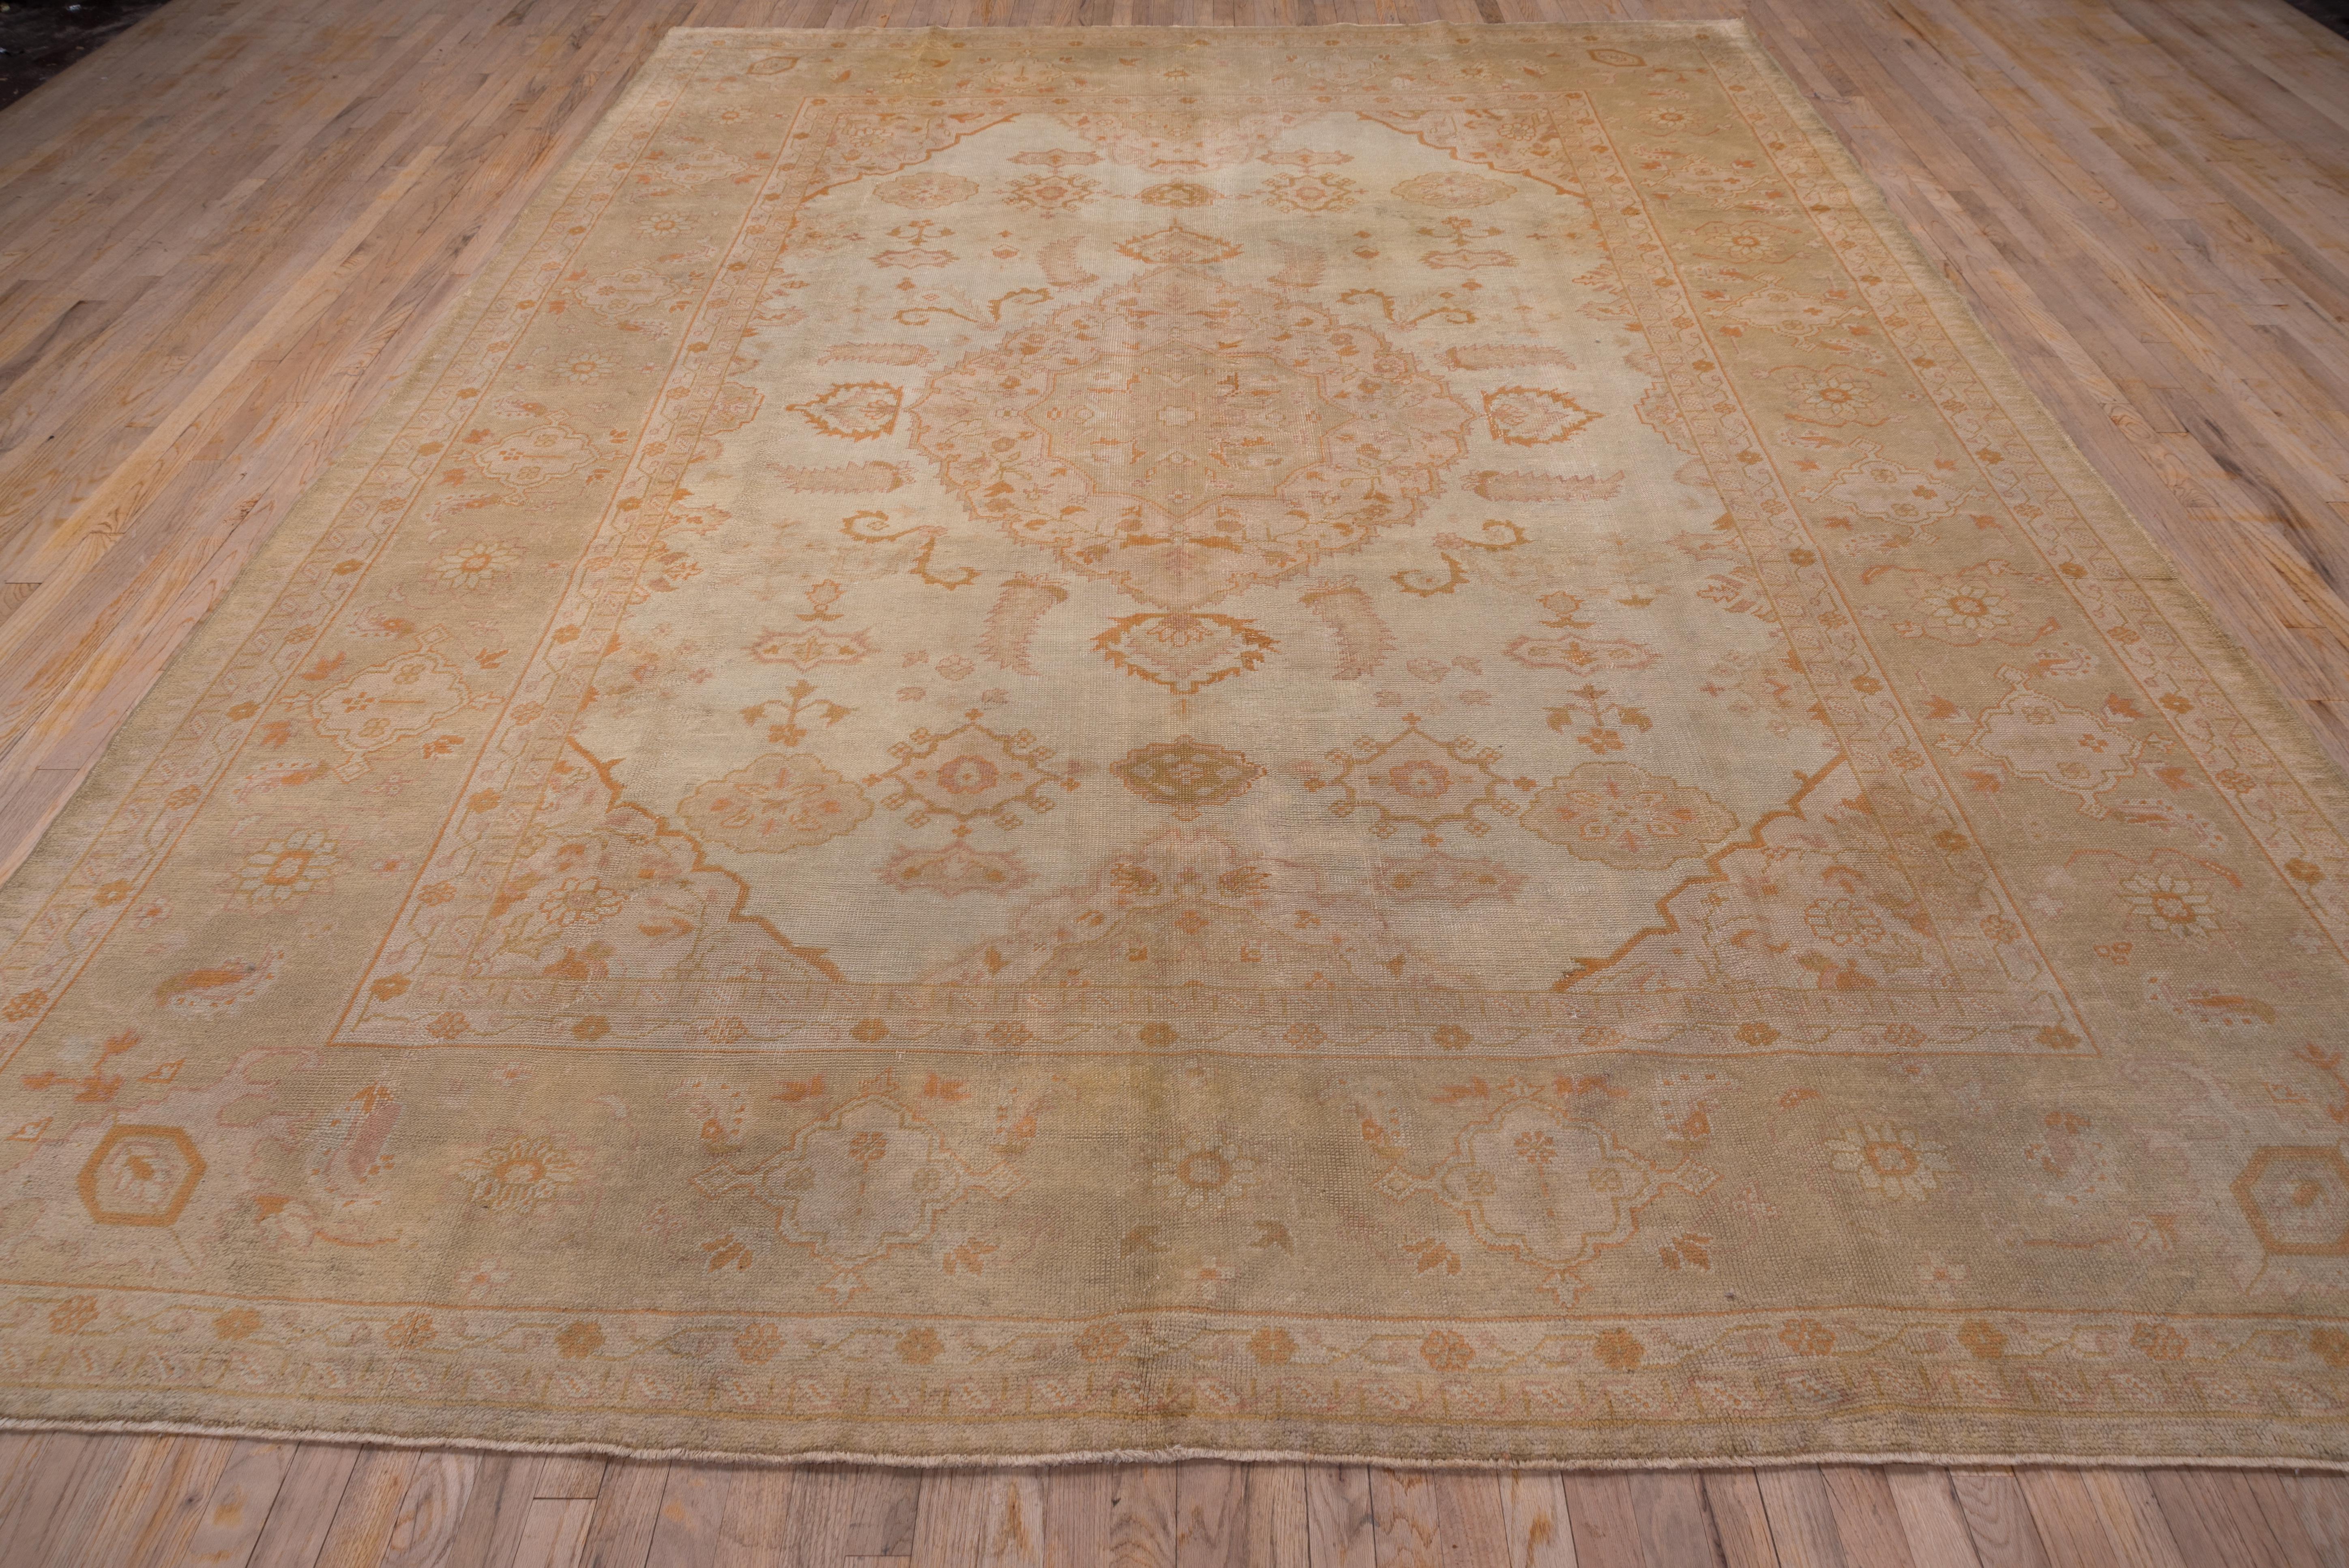 Hand-Knotted Antique Turkish Oushak Carpet, Soft Palette